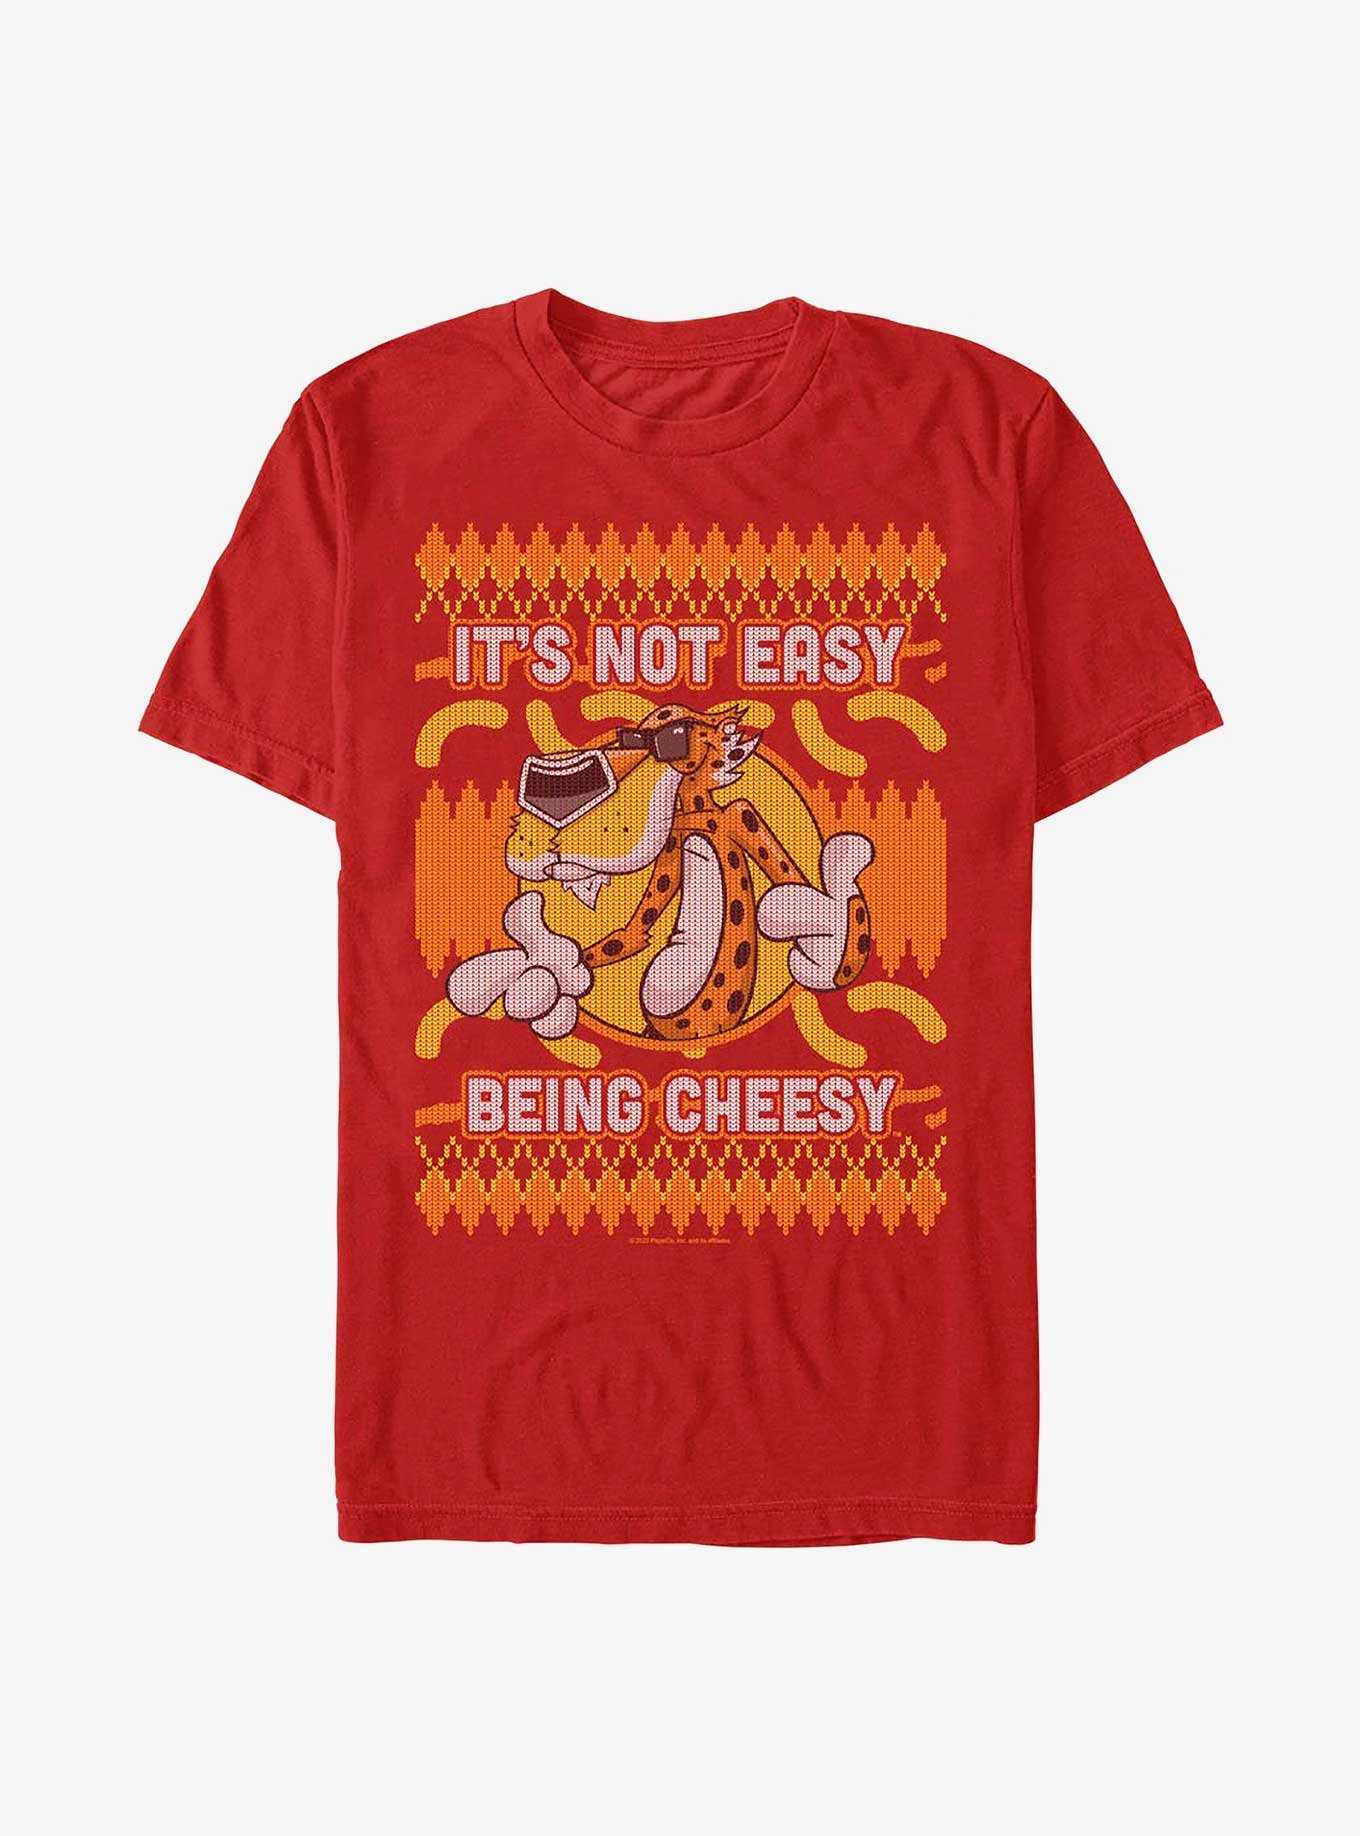 Cheetos Chester Cheetah Ugly Christmas Sweater Pattern T-Shirt, , hi-res